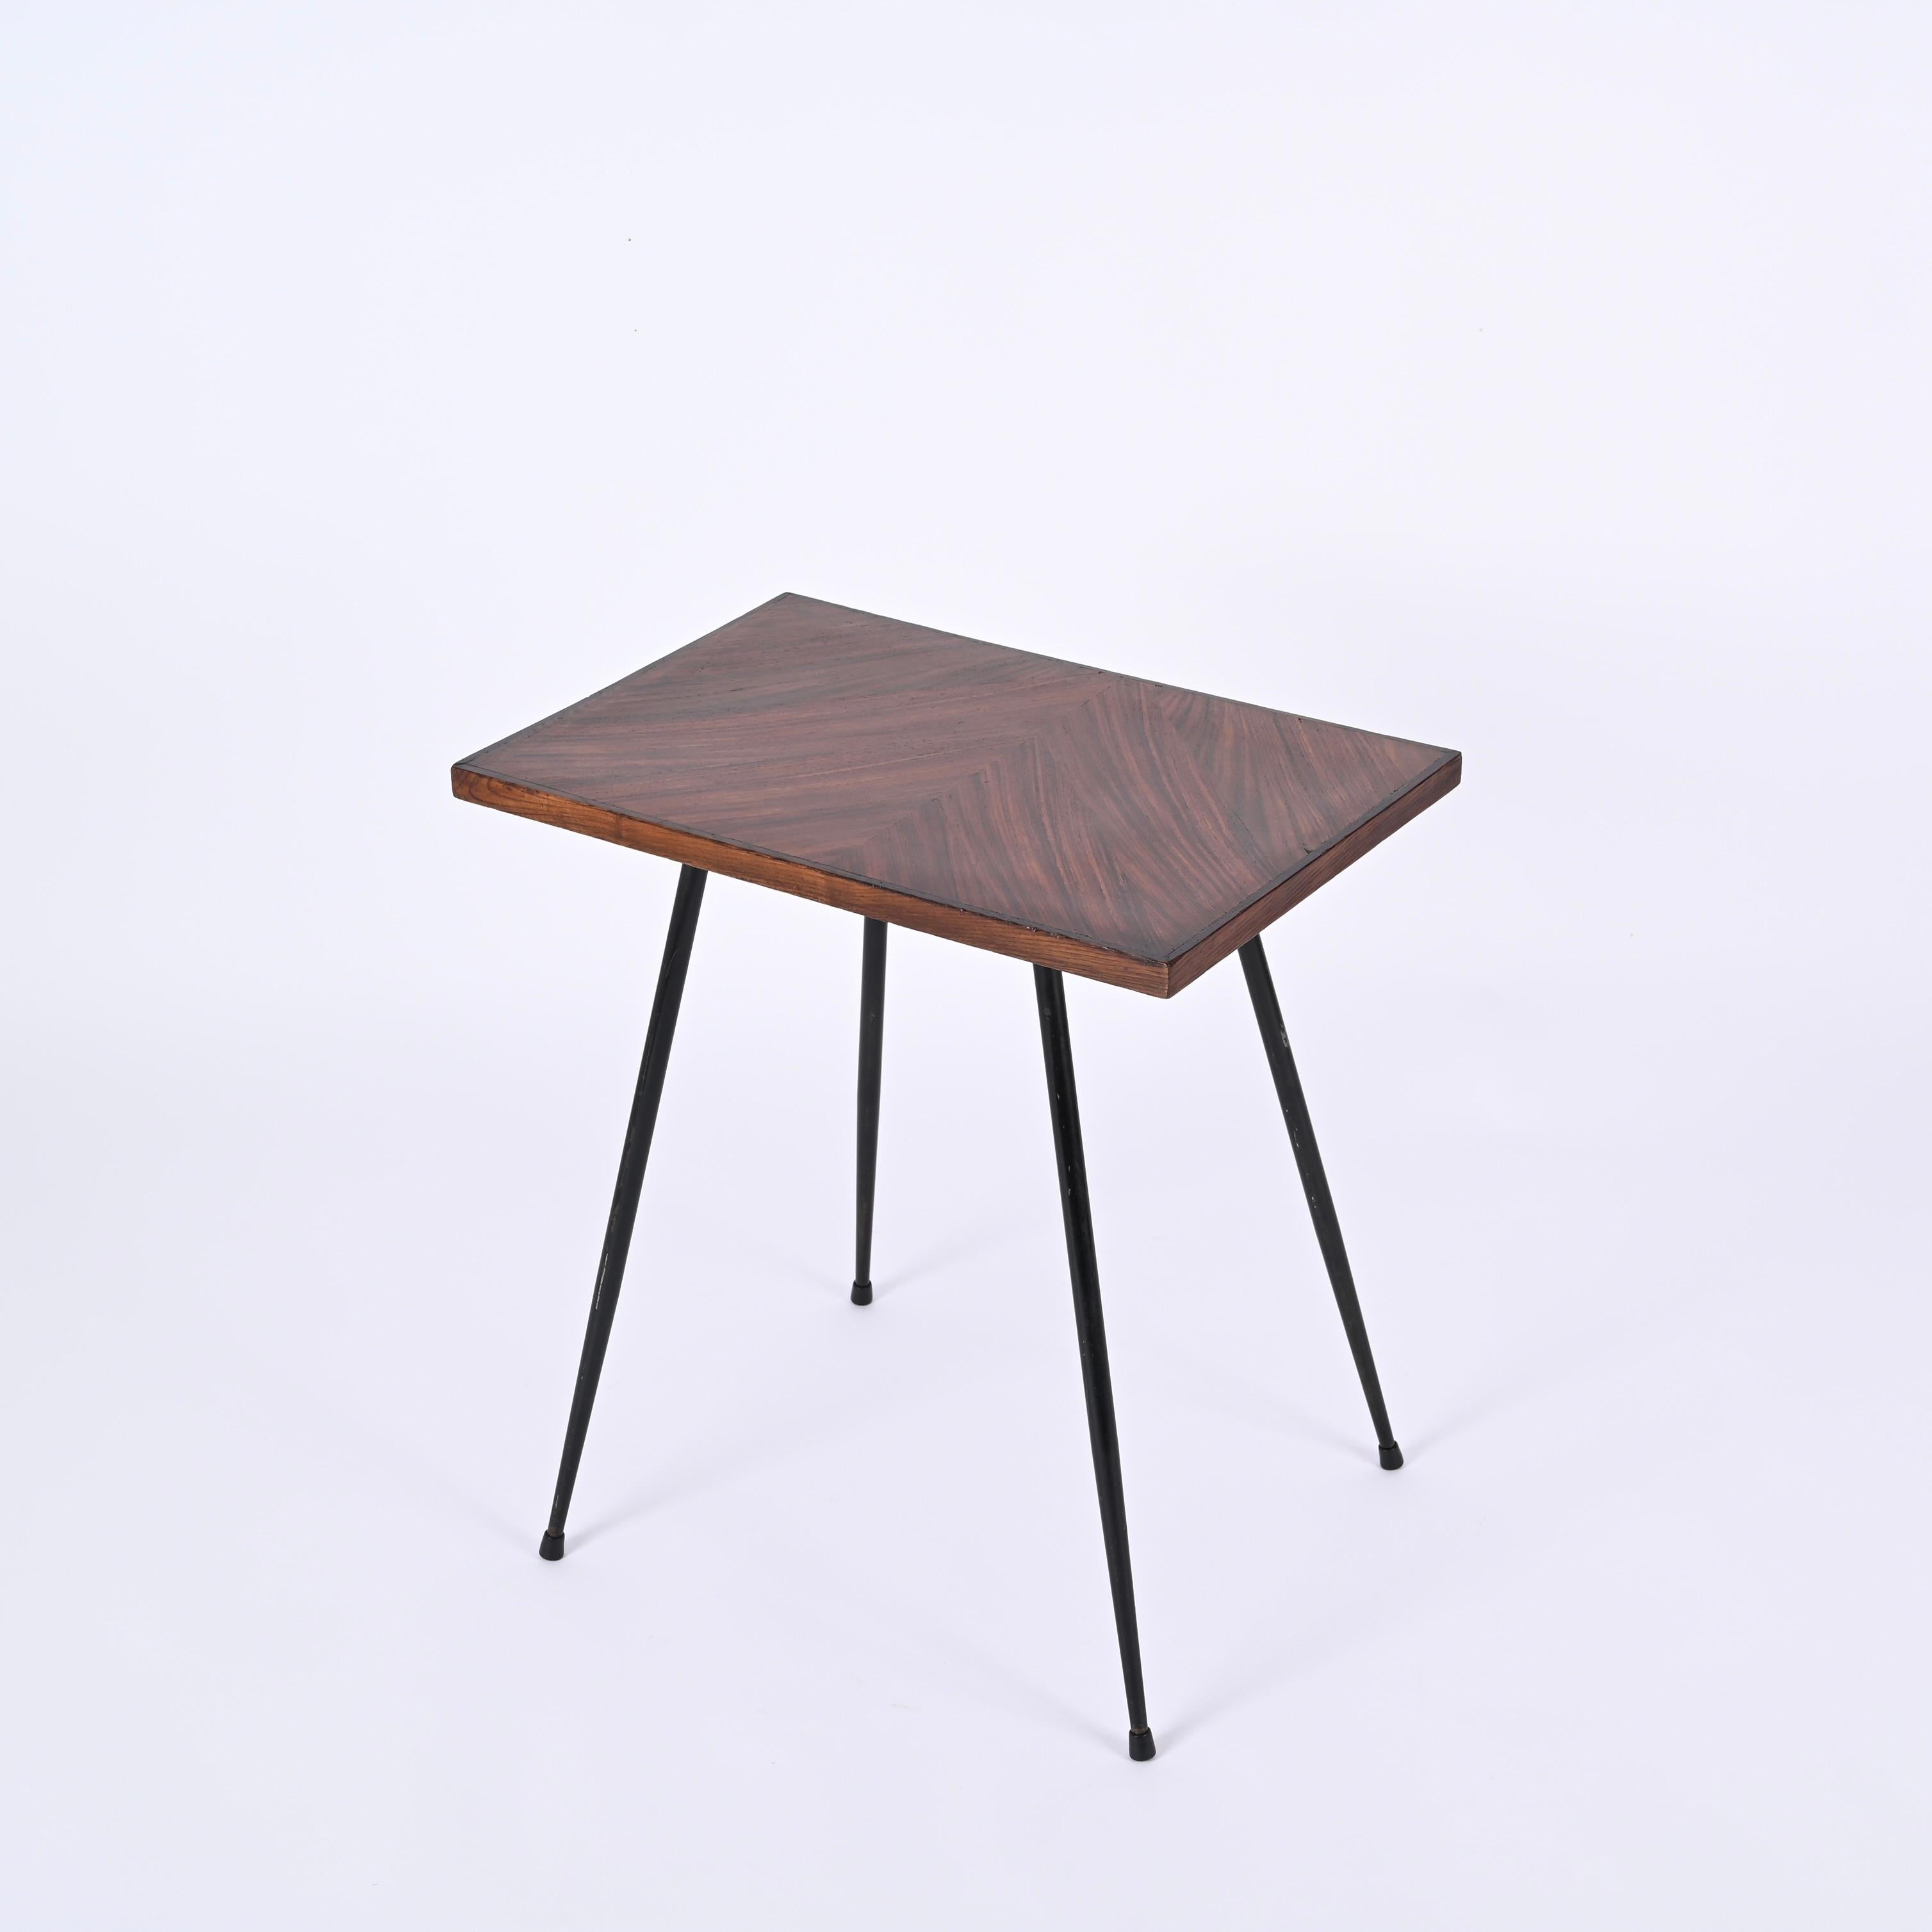 Italian Midcentury Rectangular Side Table in Teak Wood and Enameled Metal, 1950s For Sale 11